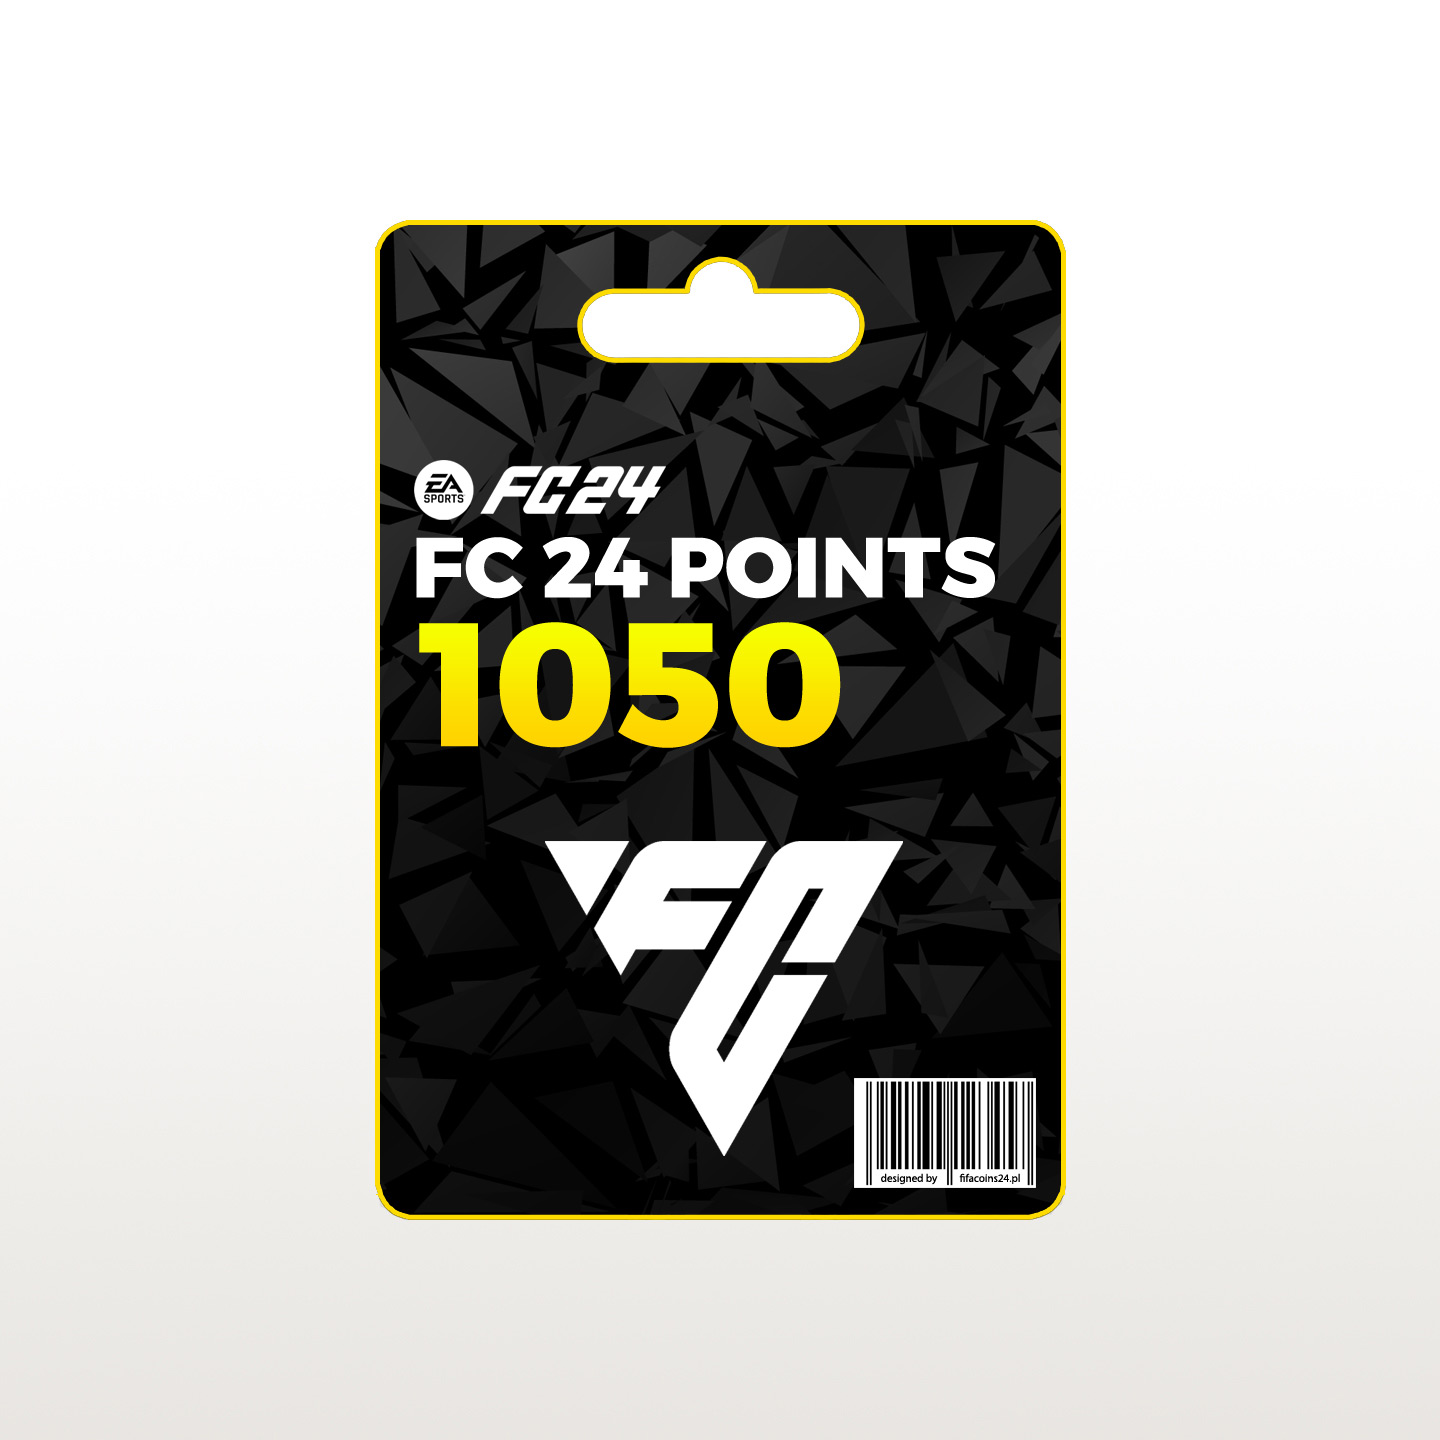 1050 FC 24 POINTS